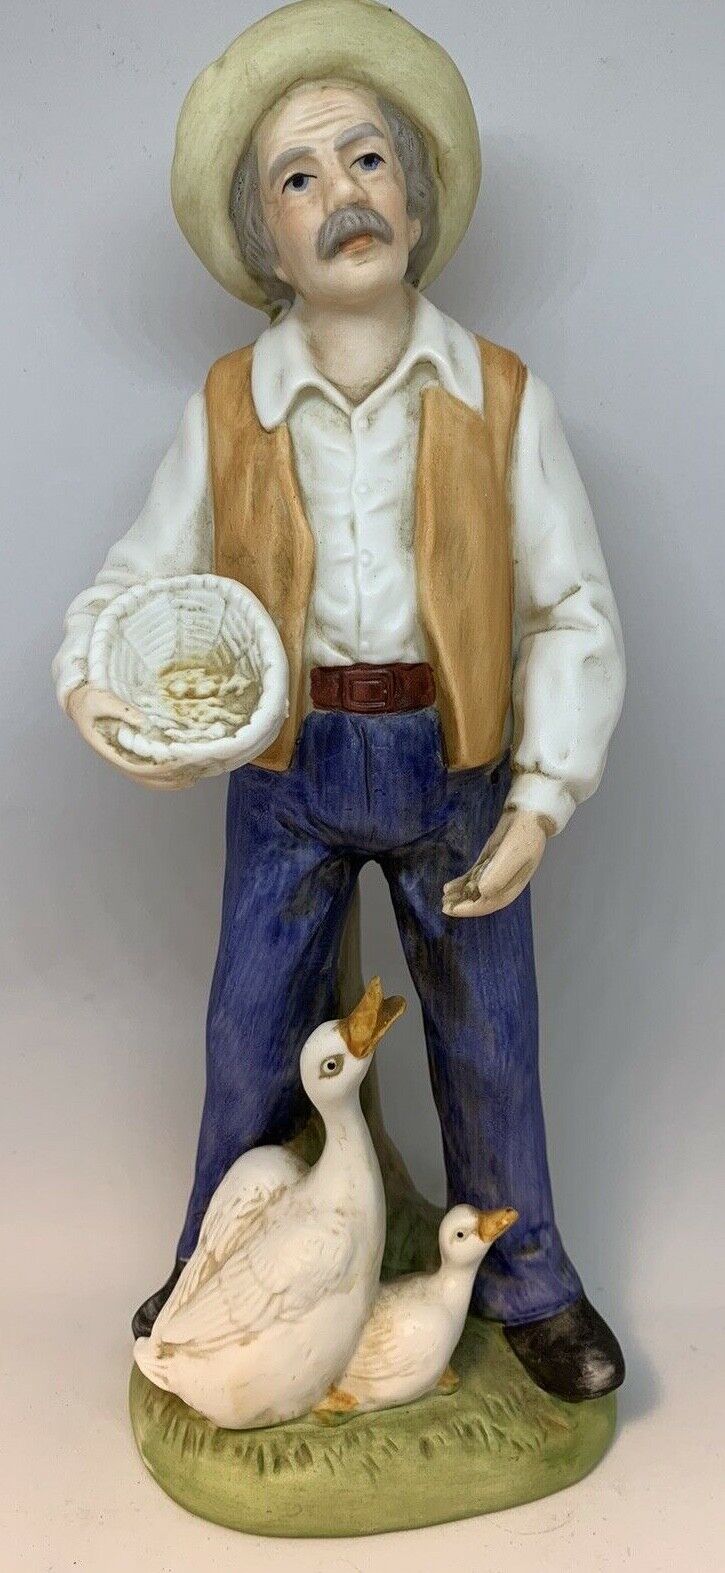 VTG Homco “Old Farm Couple” Figurine 1426 Porcelain Man Feeding Ducks 8 in tall